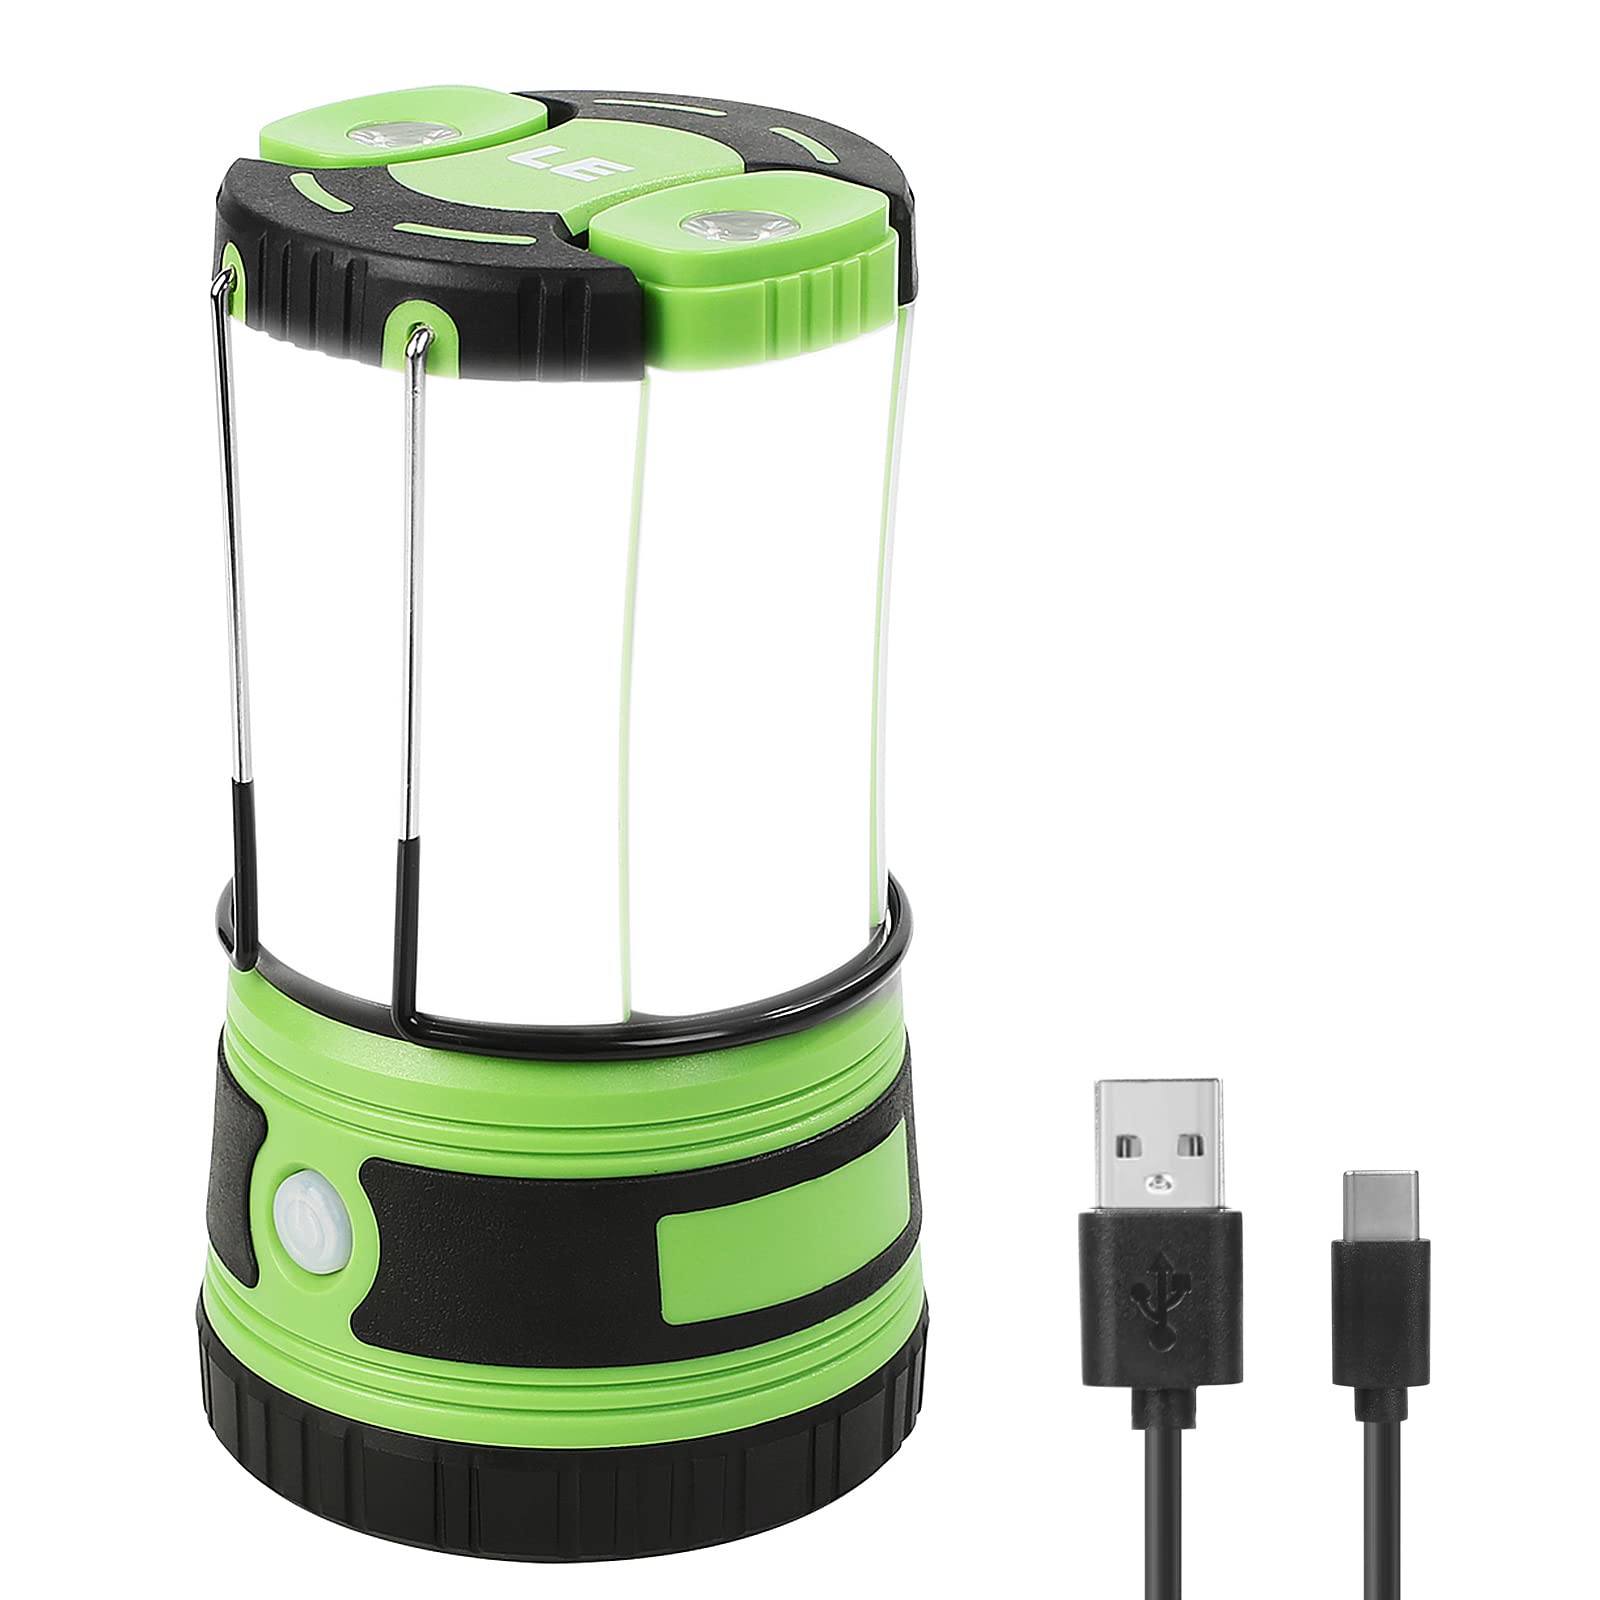 Lepro LED Campinglampe USB, Ultra Hell 1000 Lumen, 4 Beleuchtungsmodi Laterne mit 2 abnehmbaren Taschenlampen, Batteriebetrieben und USB Notfallleuchte für Stromausfällen, Wandern, Notfall, Ausfälle